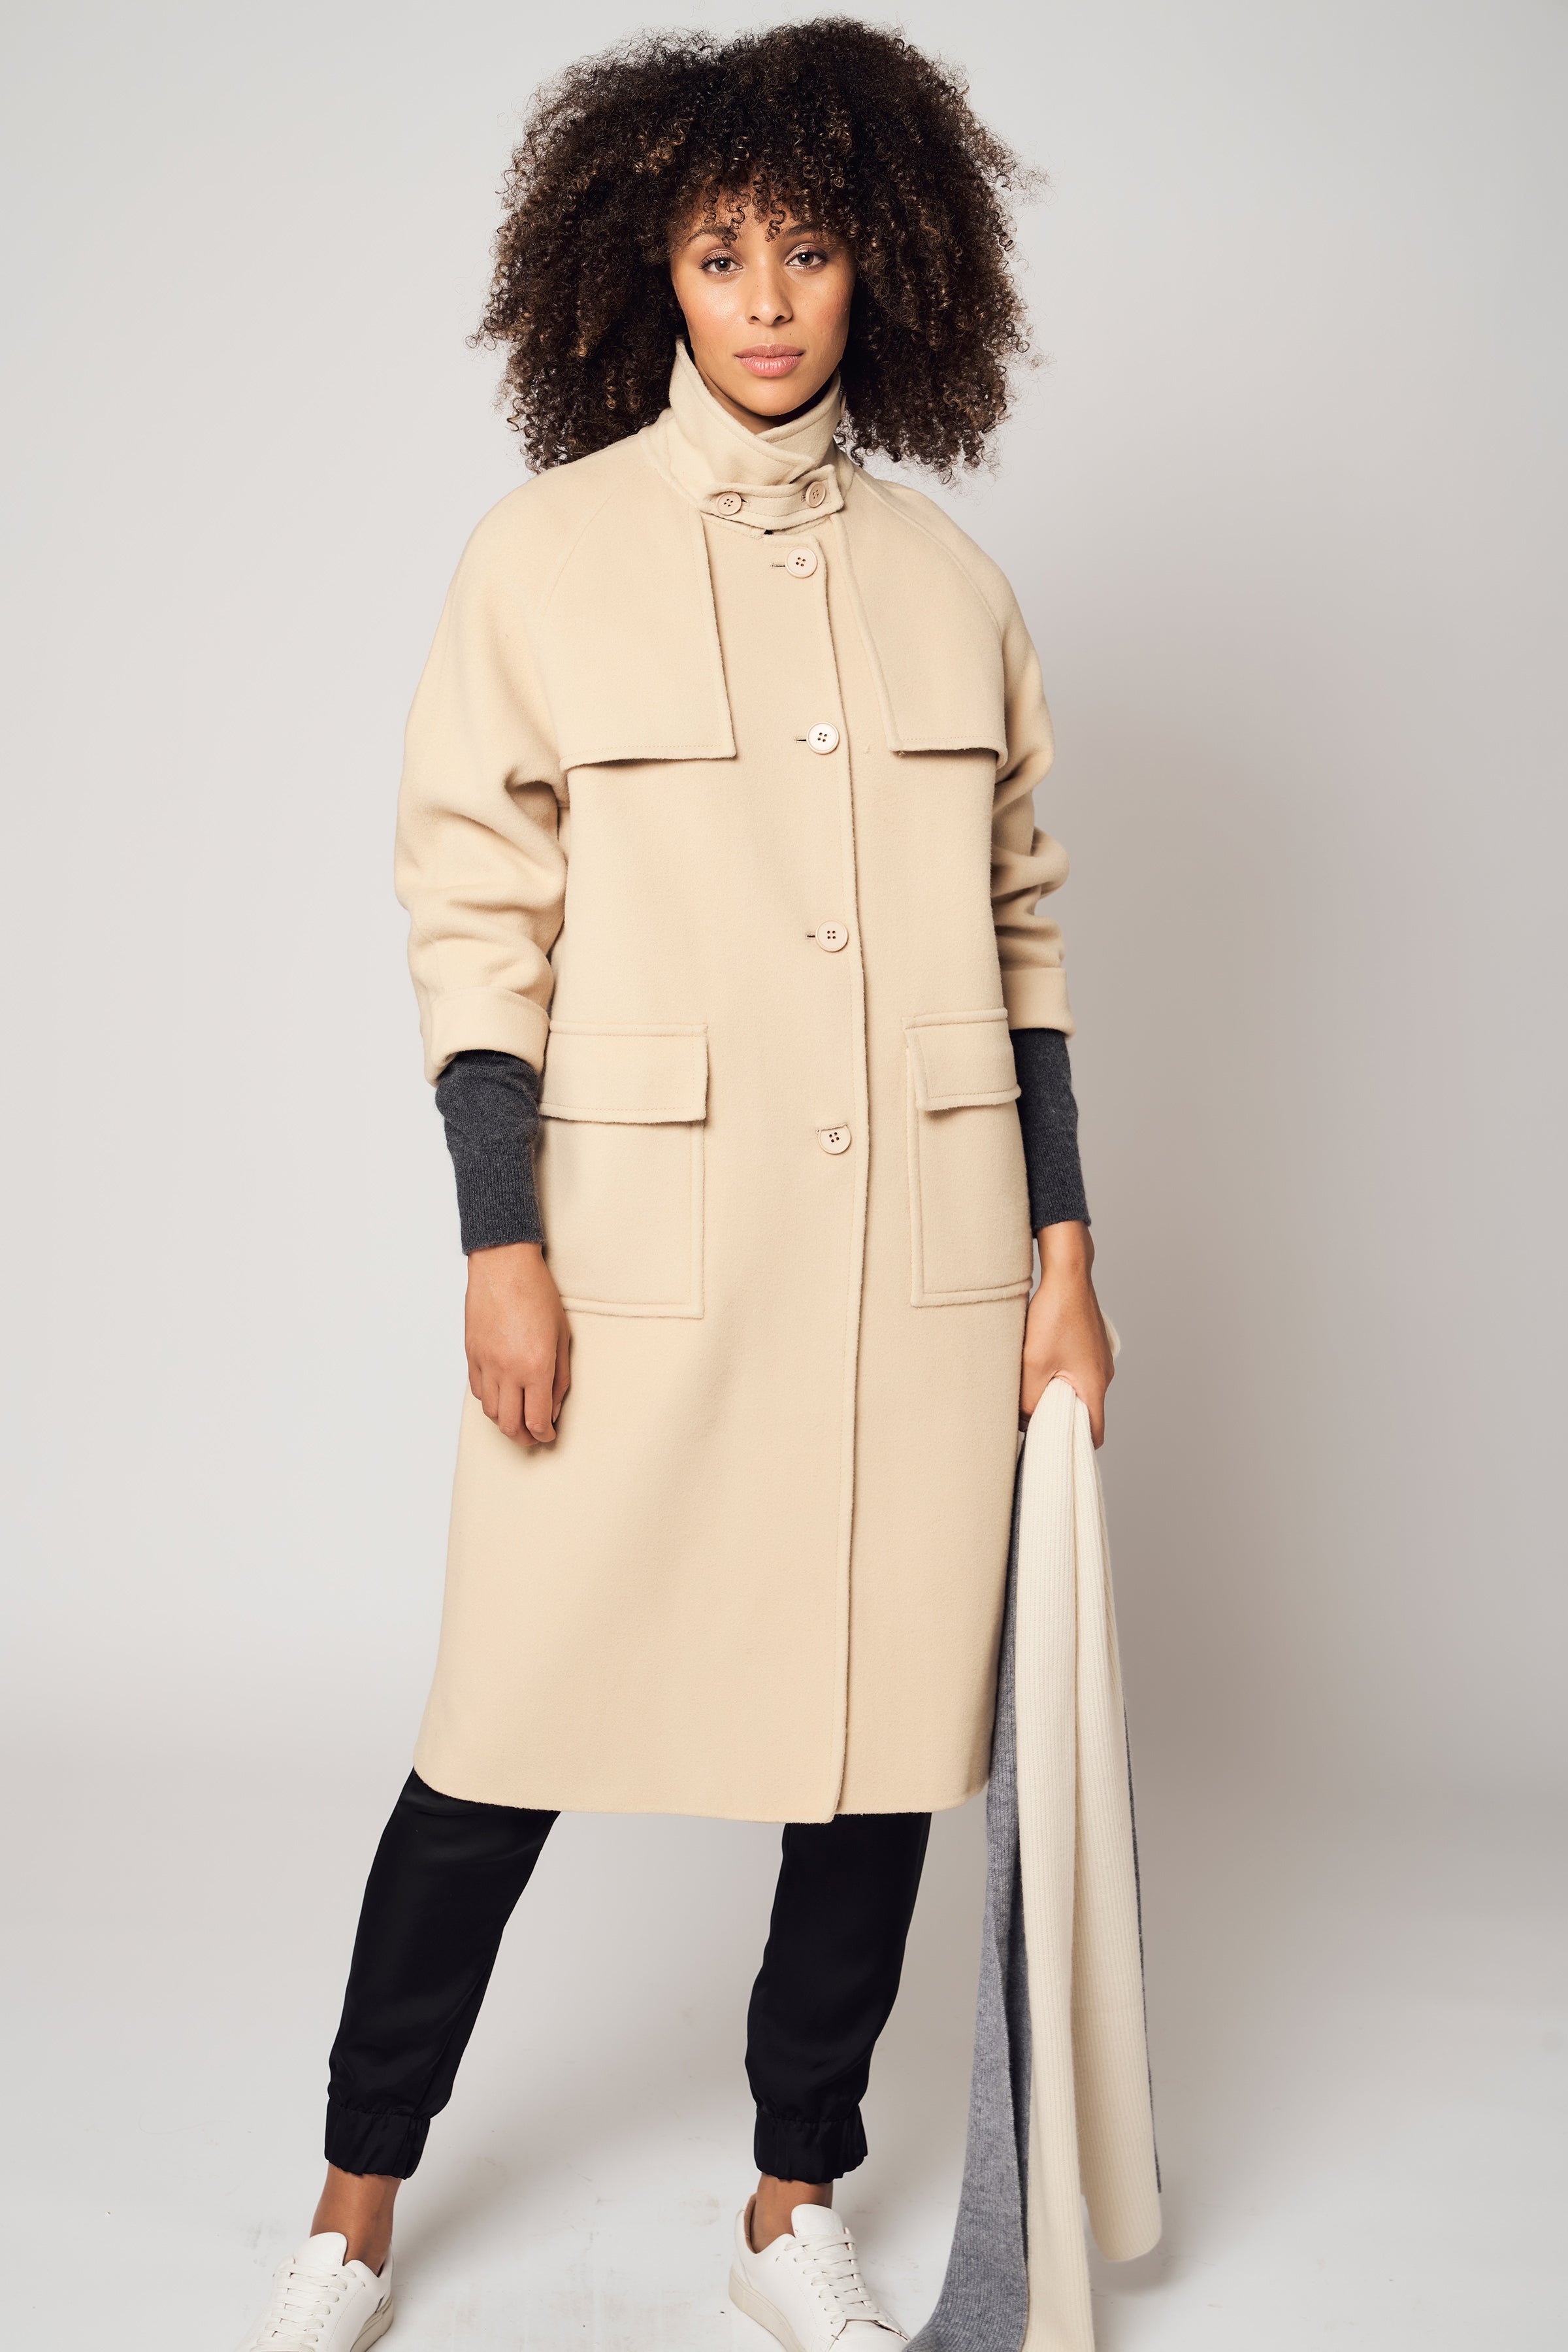 Lamb Wool | Women Wool Coat | Women Jacket Coat | Bellemere New York